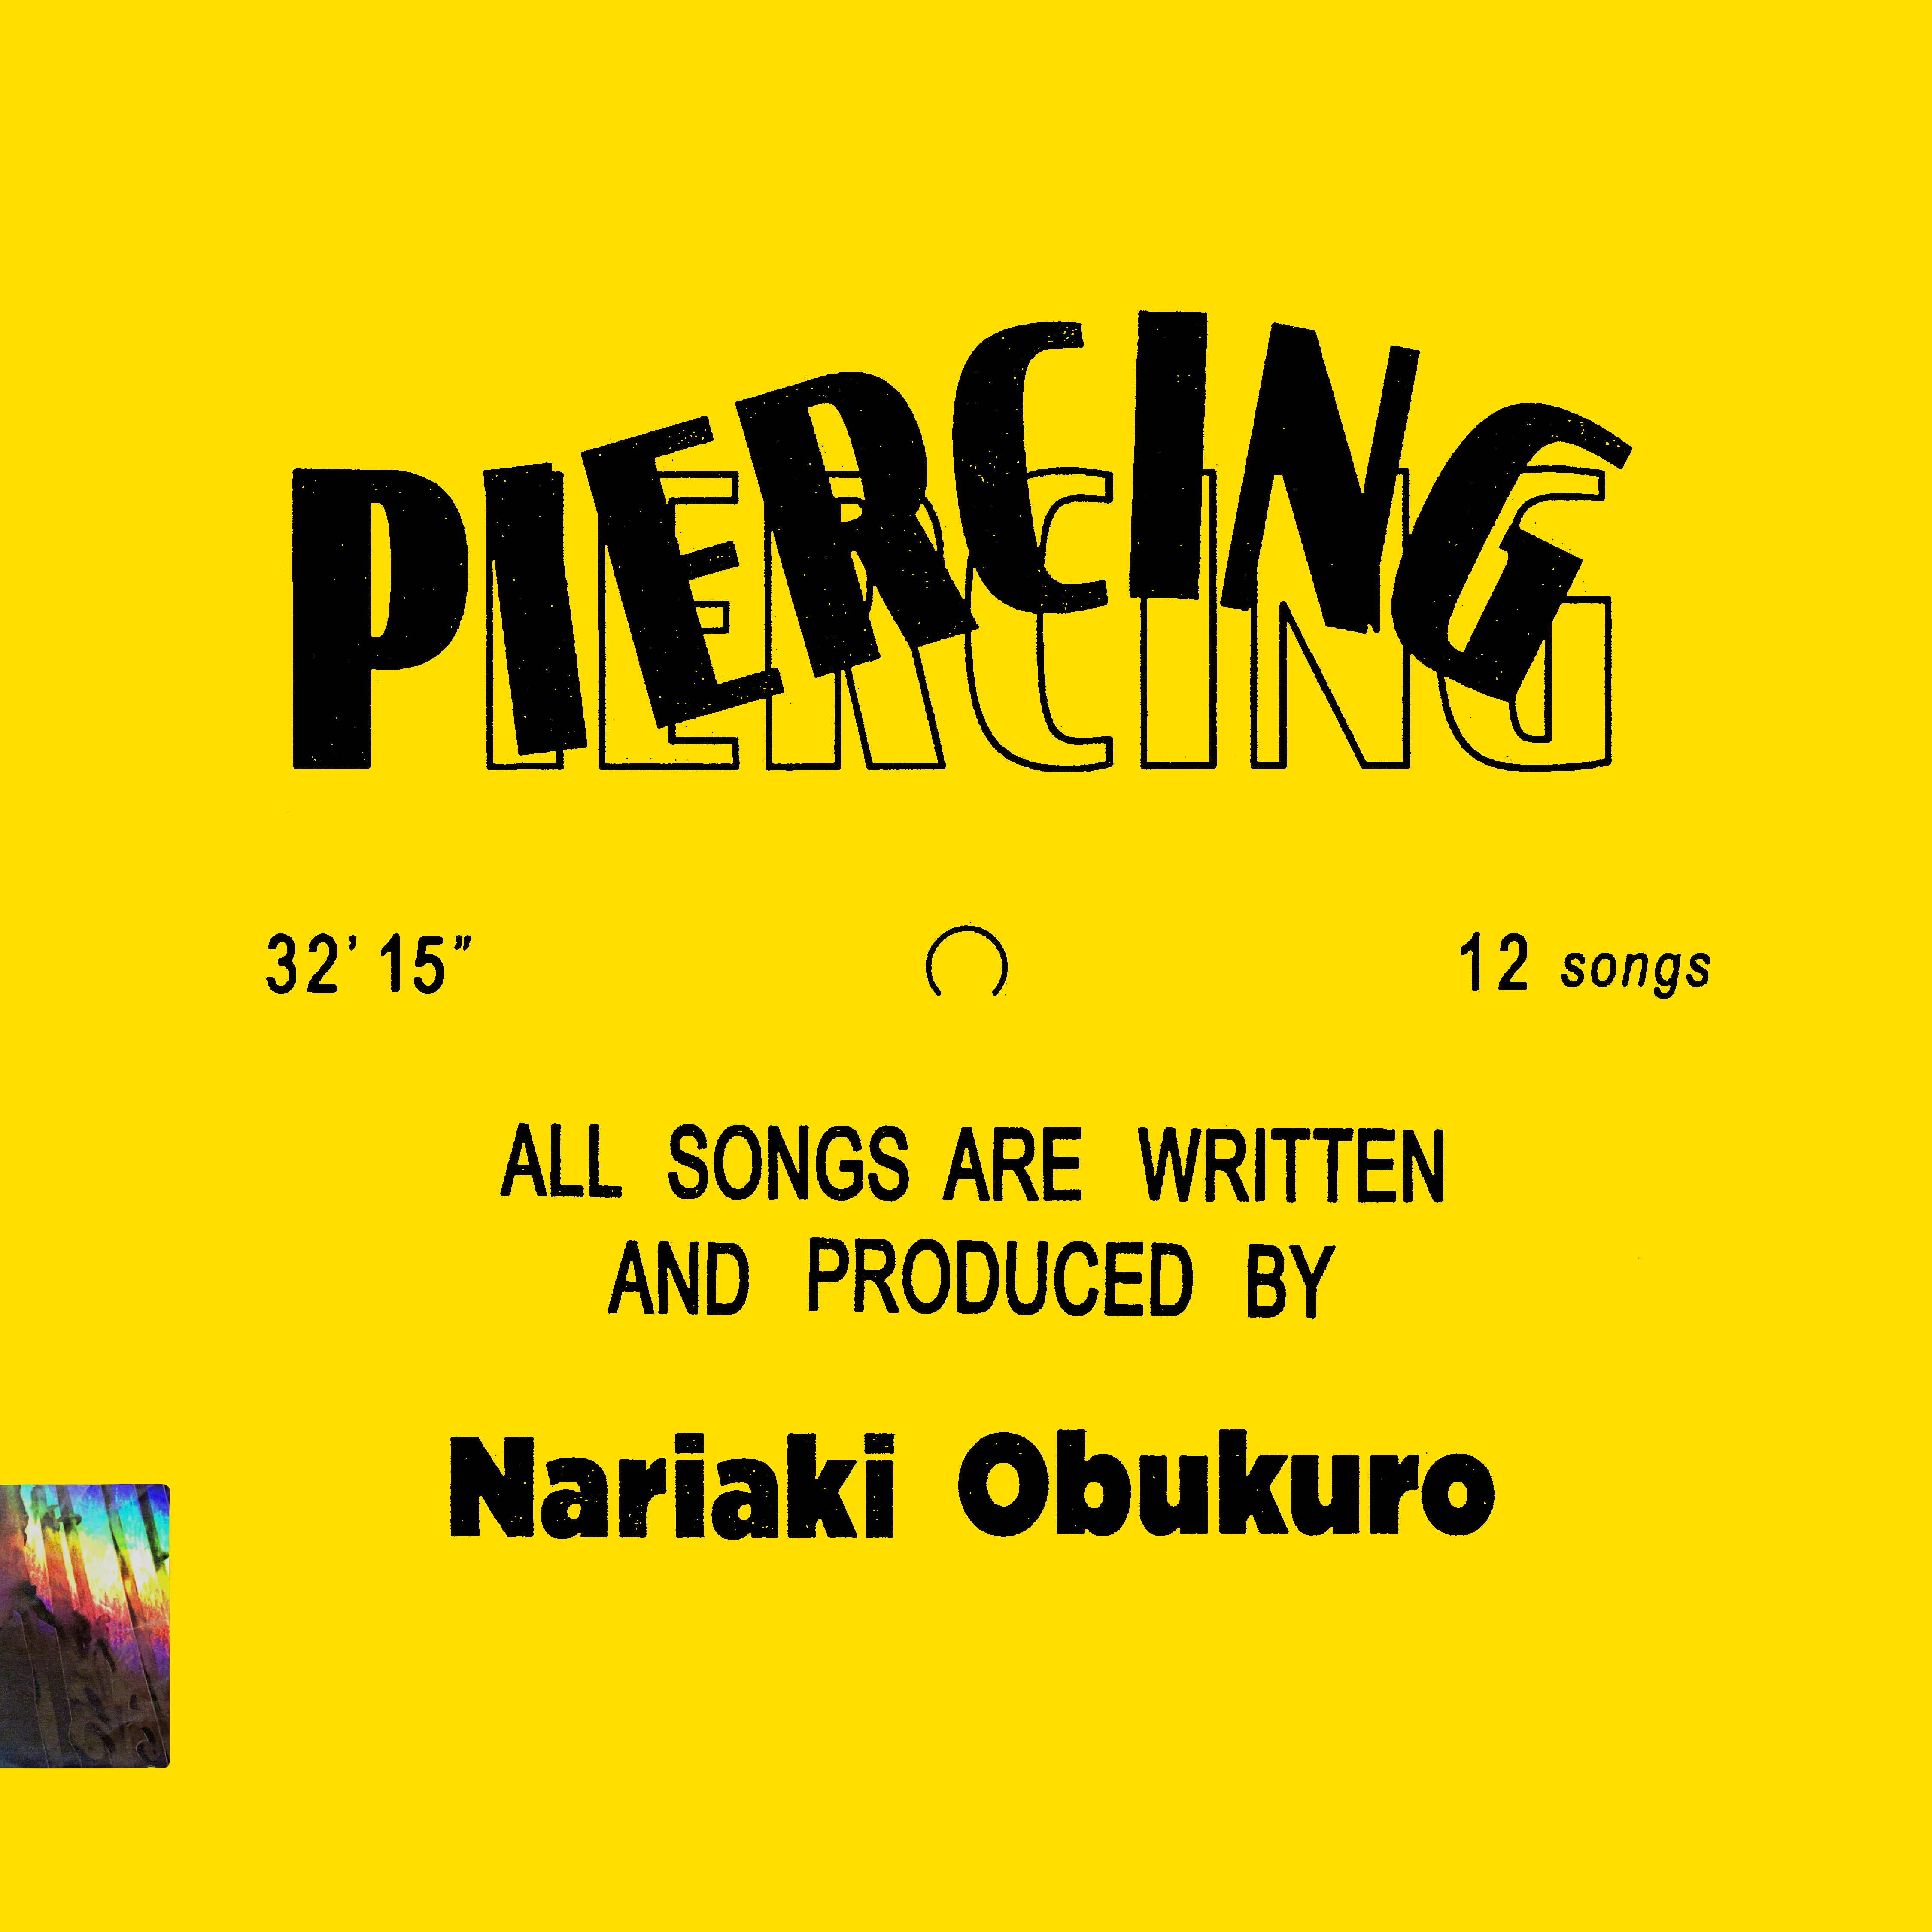 『Piercing』